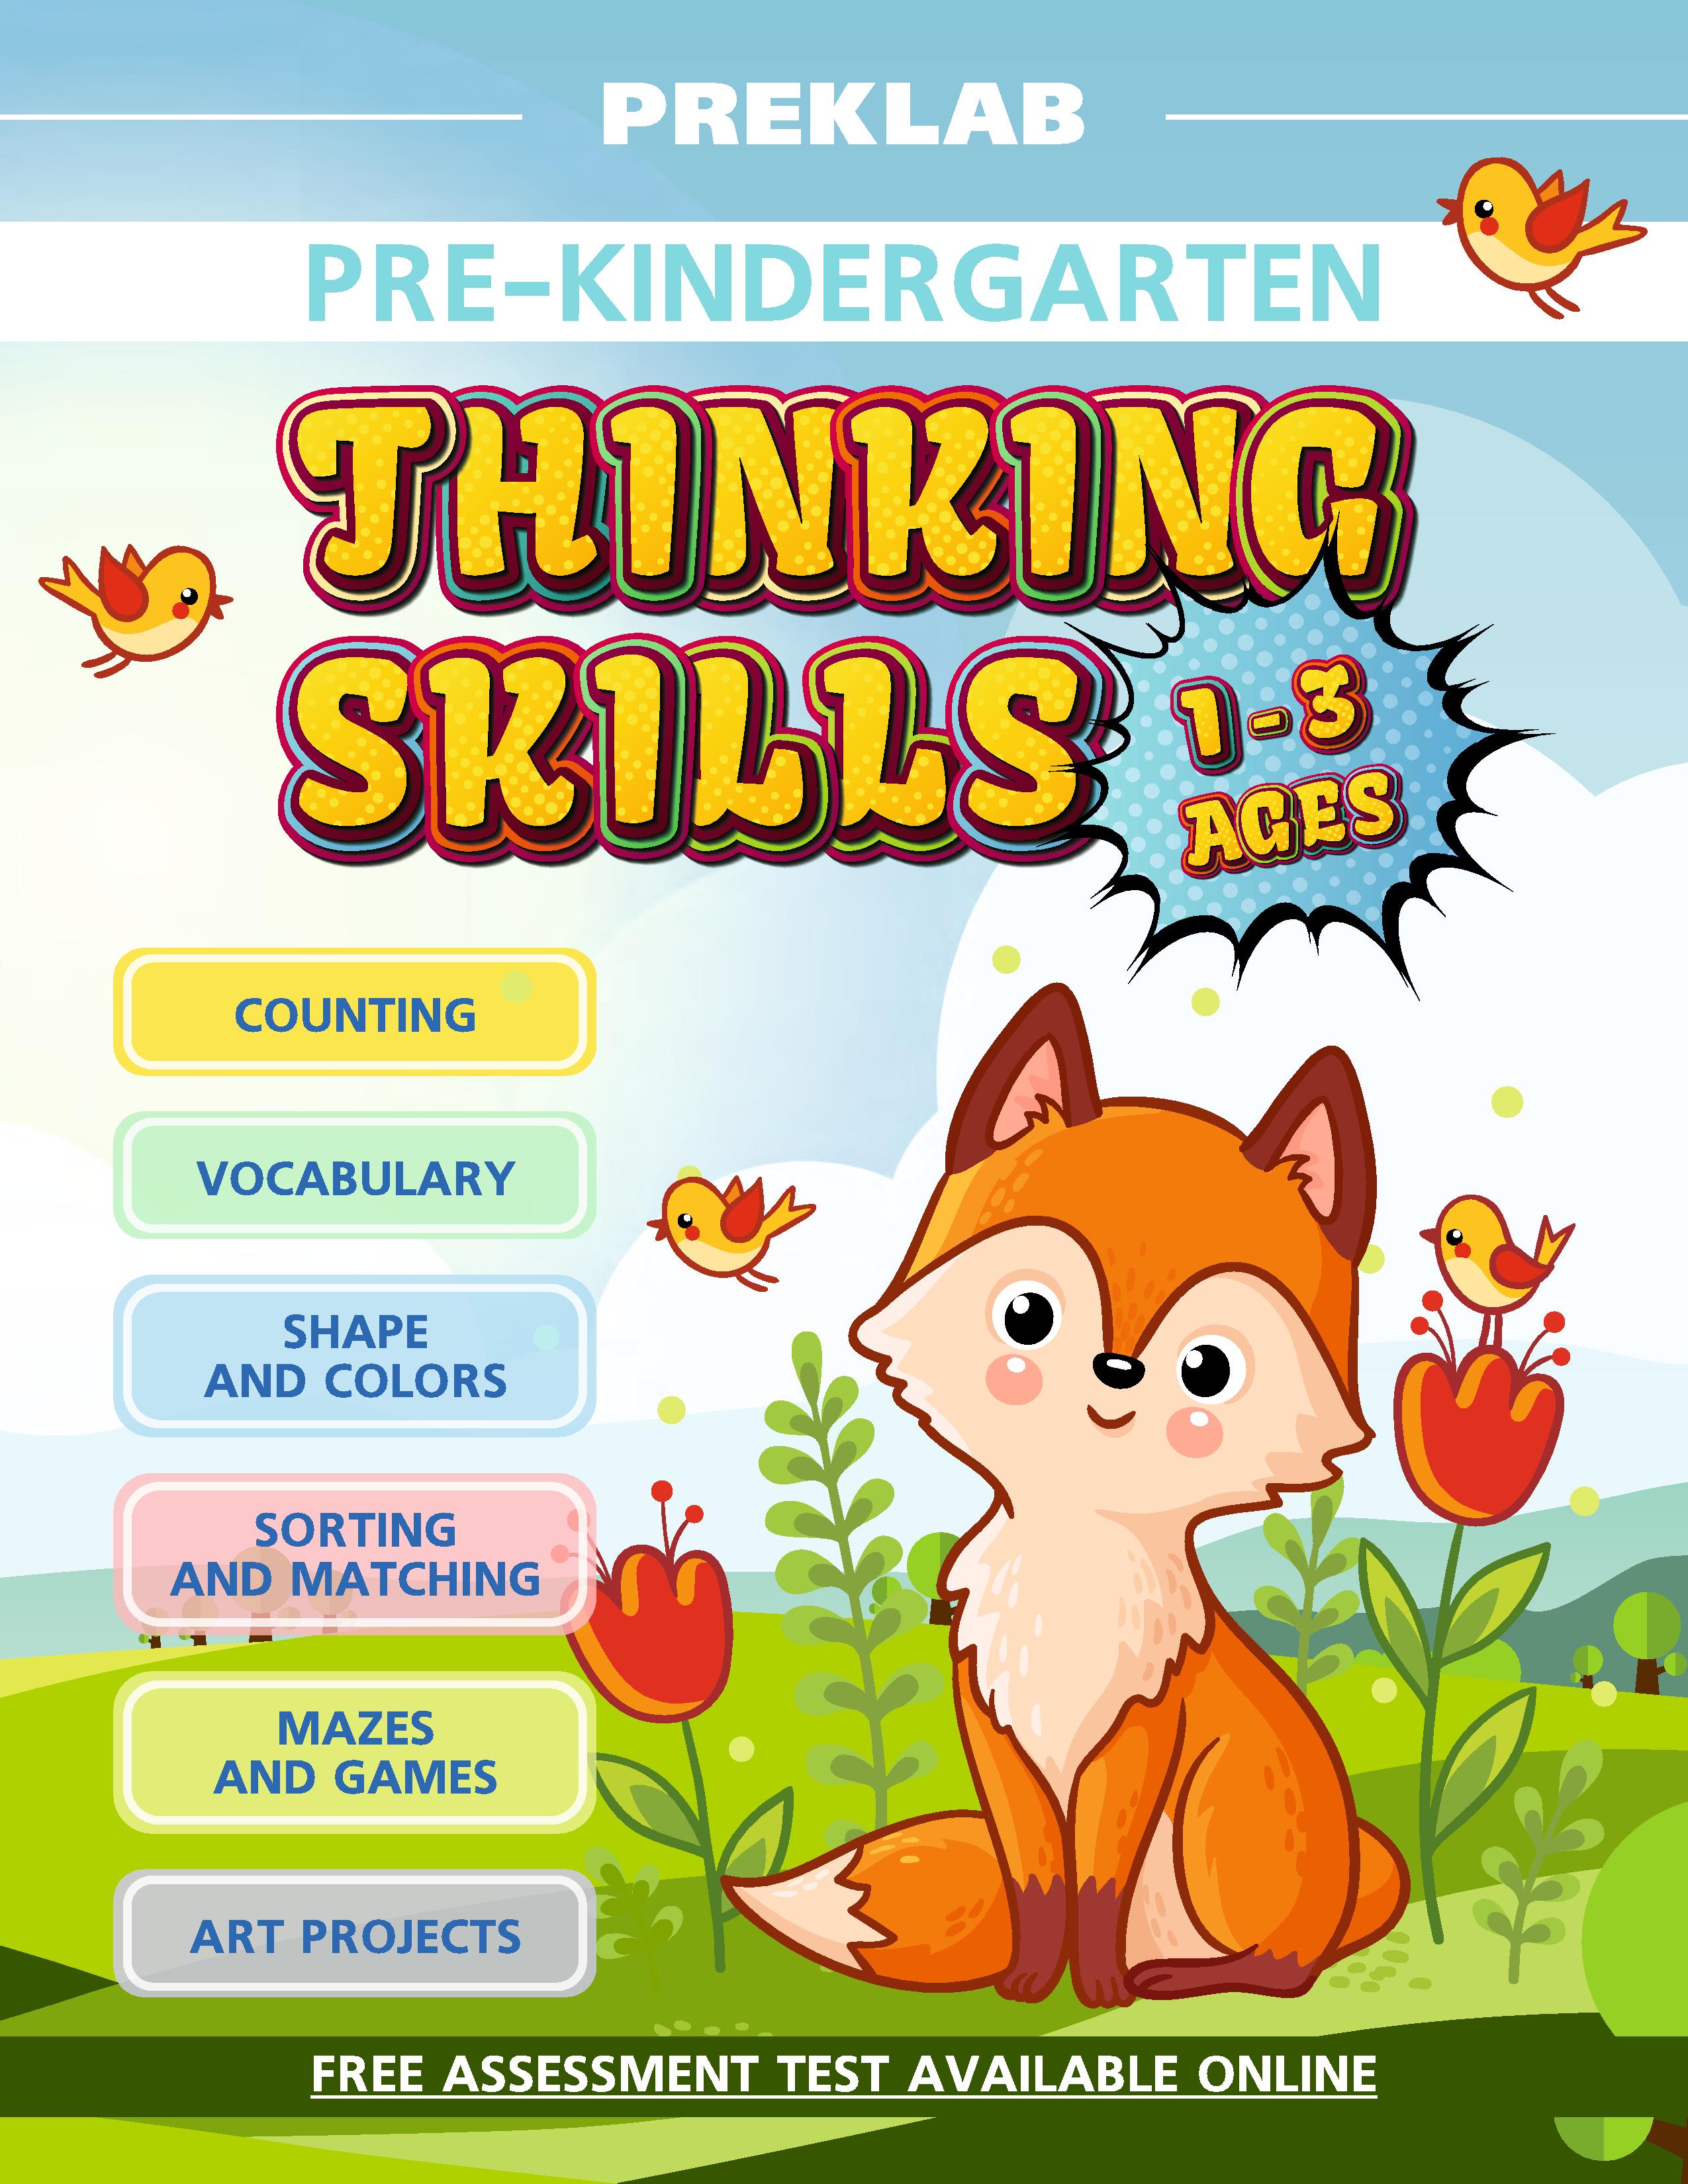 FREE: Thinking skills pre-K toddler workbook 1-3 years prek age 1 2 3 by Touma Hashimoto